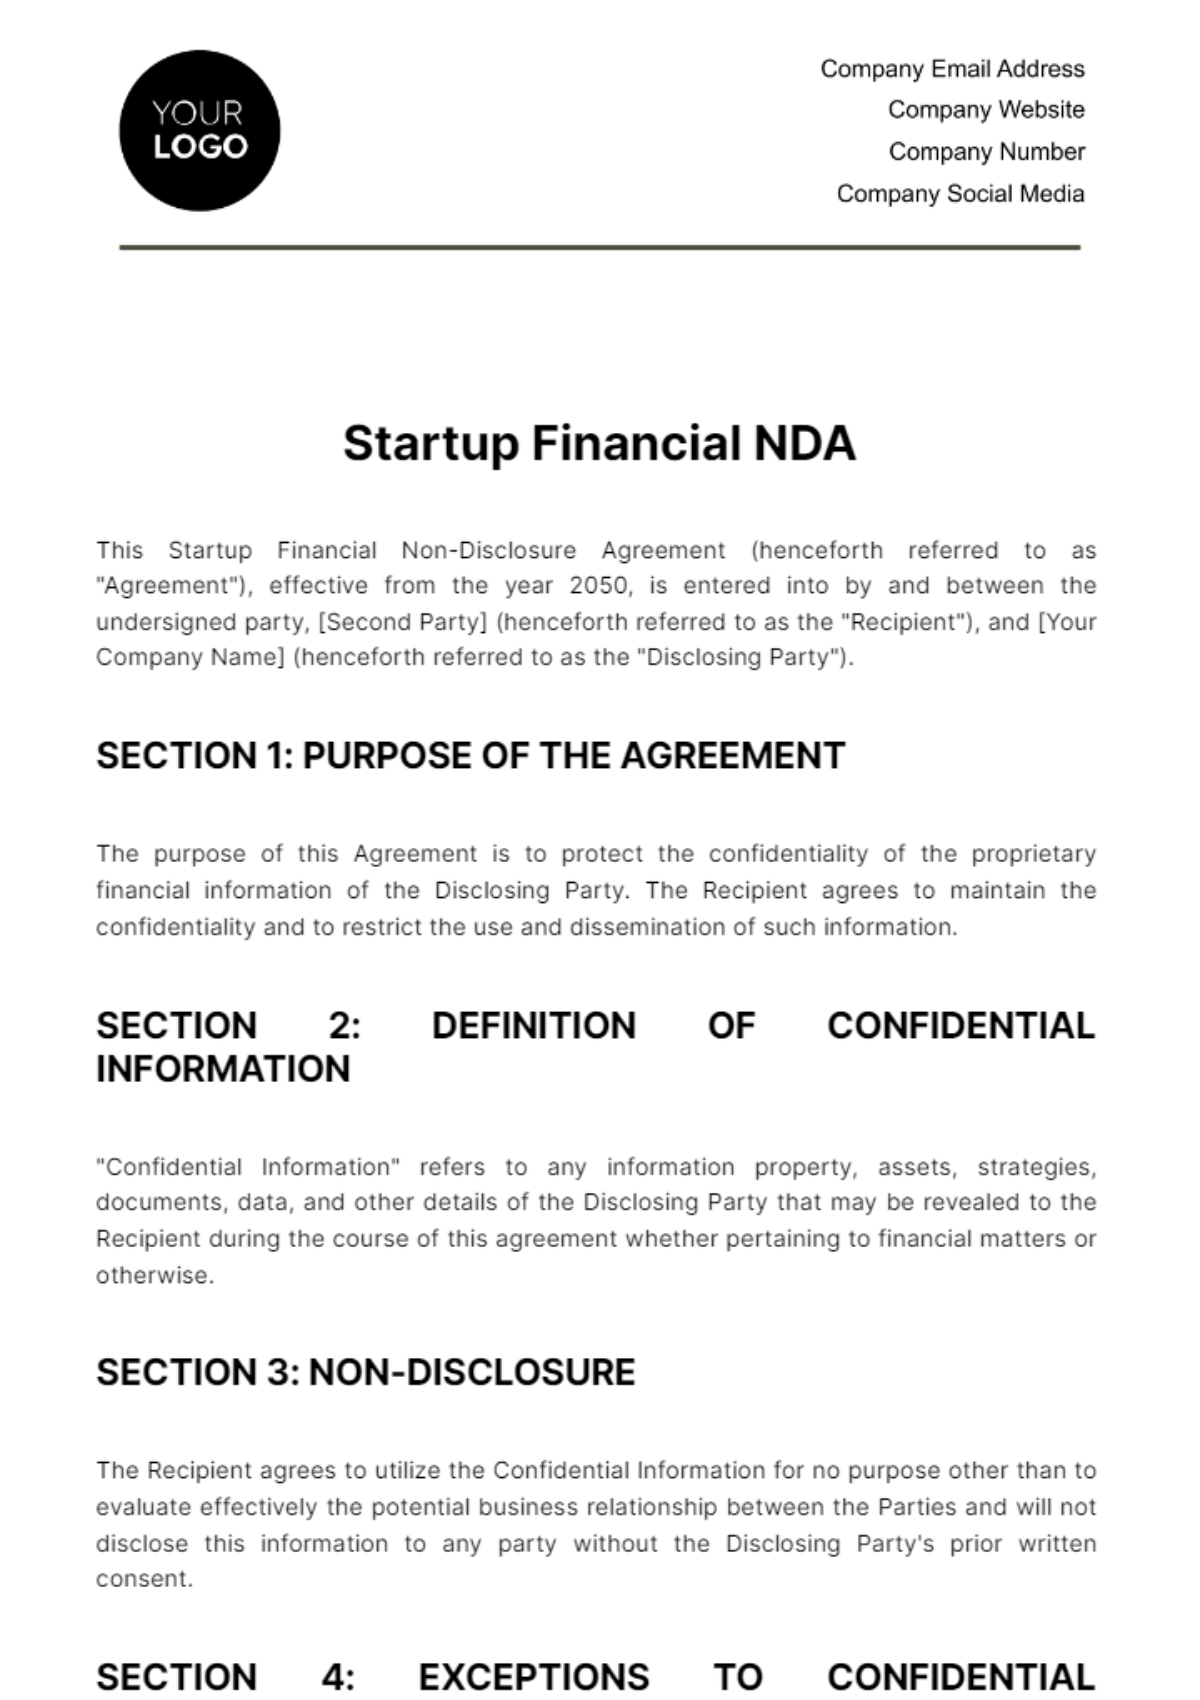 Startup Financial NDA Template